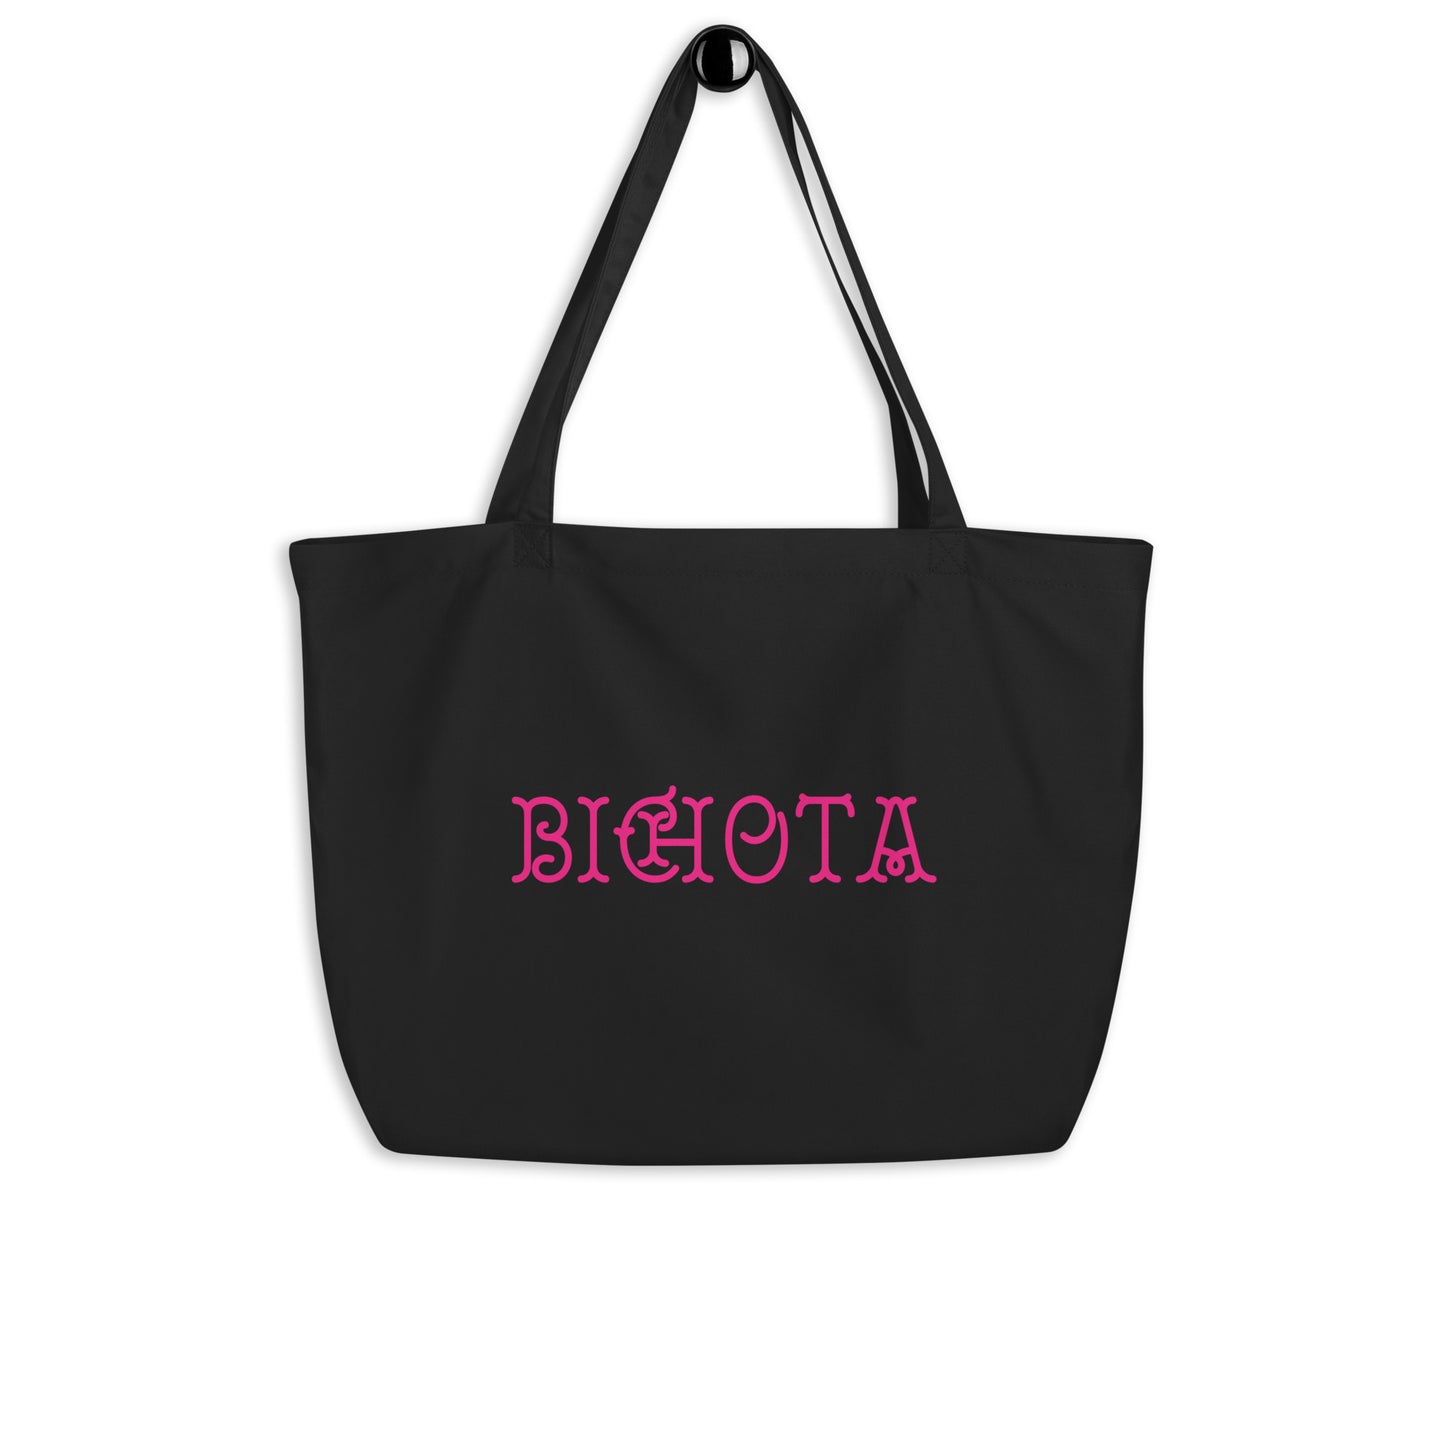 Bichota (large)Tote Bag